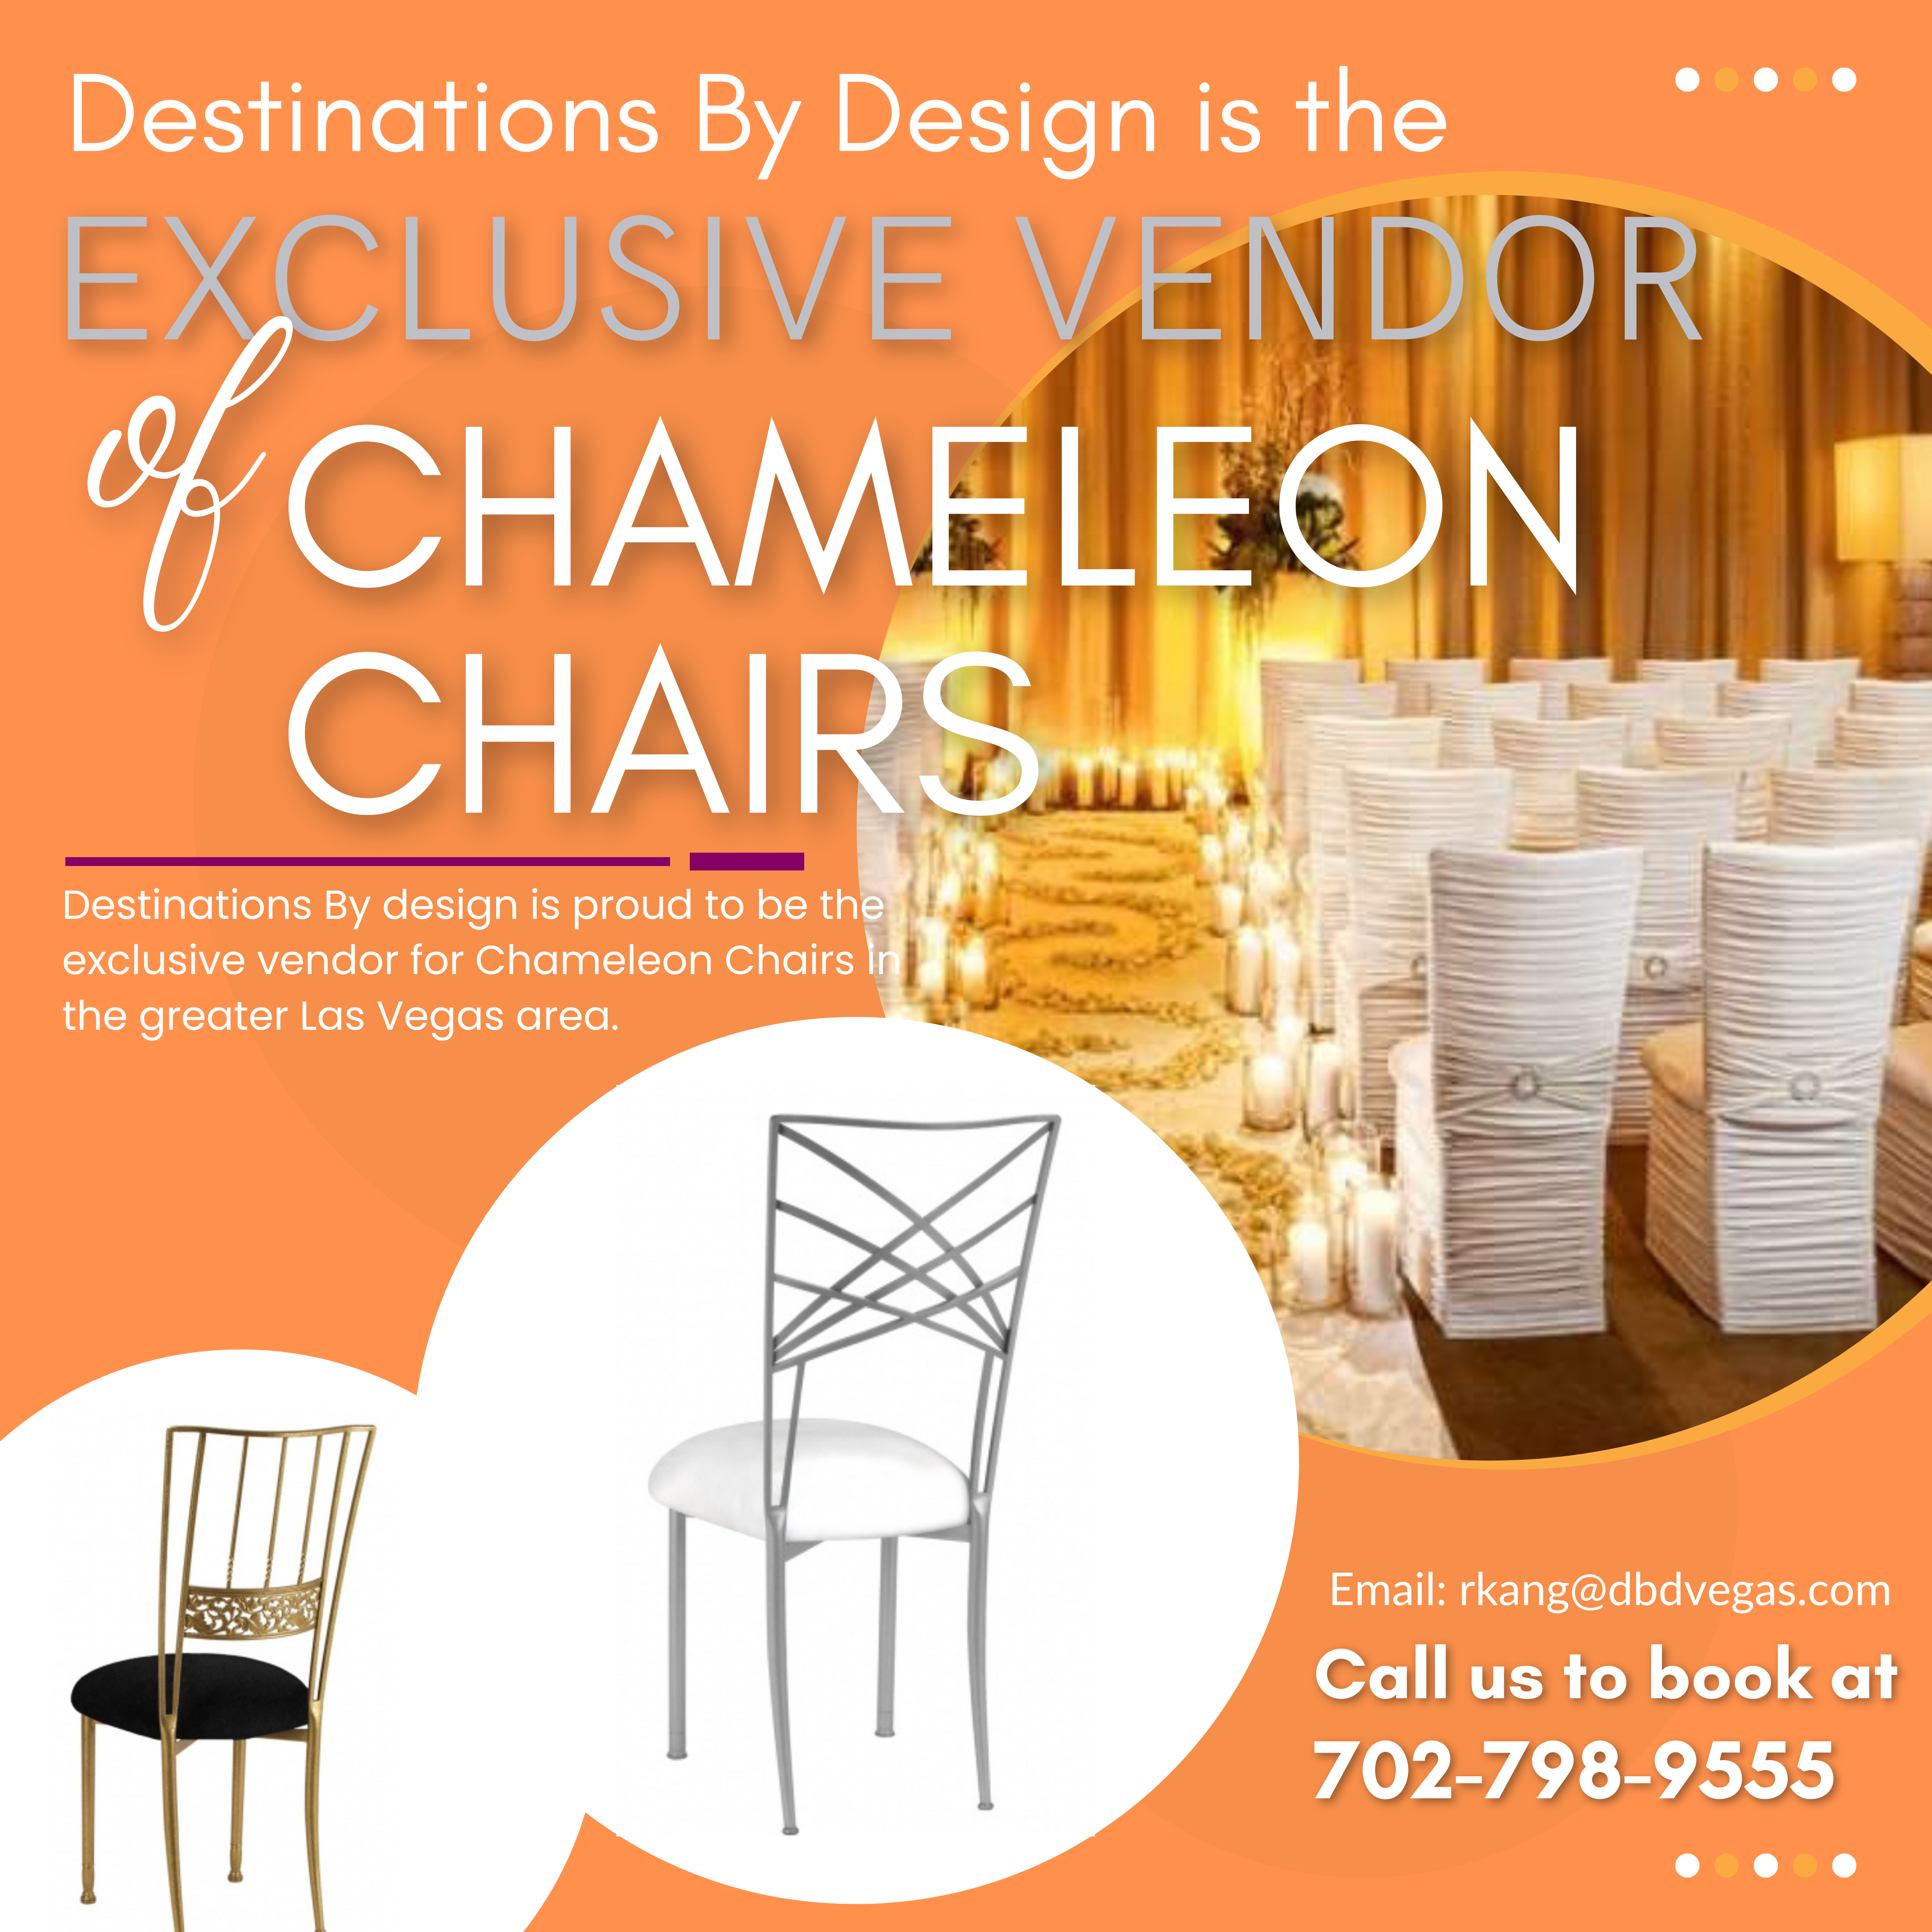 Chameleon Chair Rentals at DBD